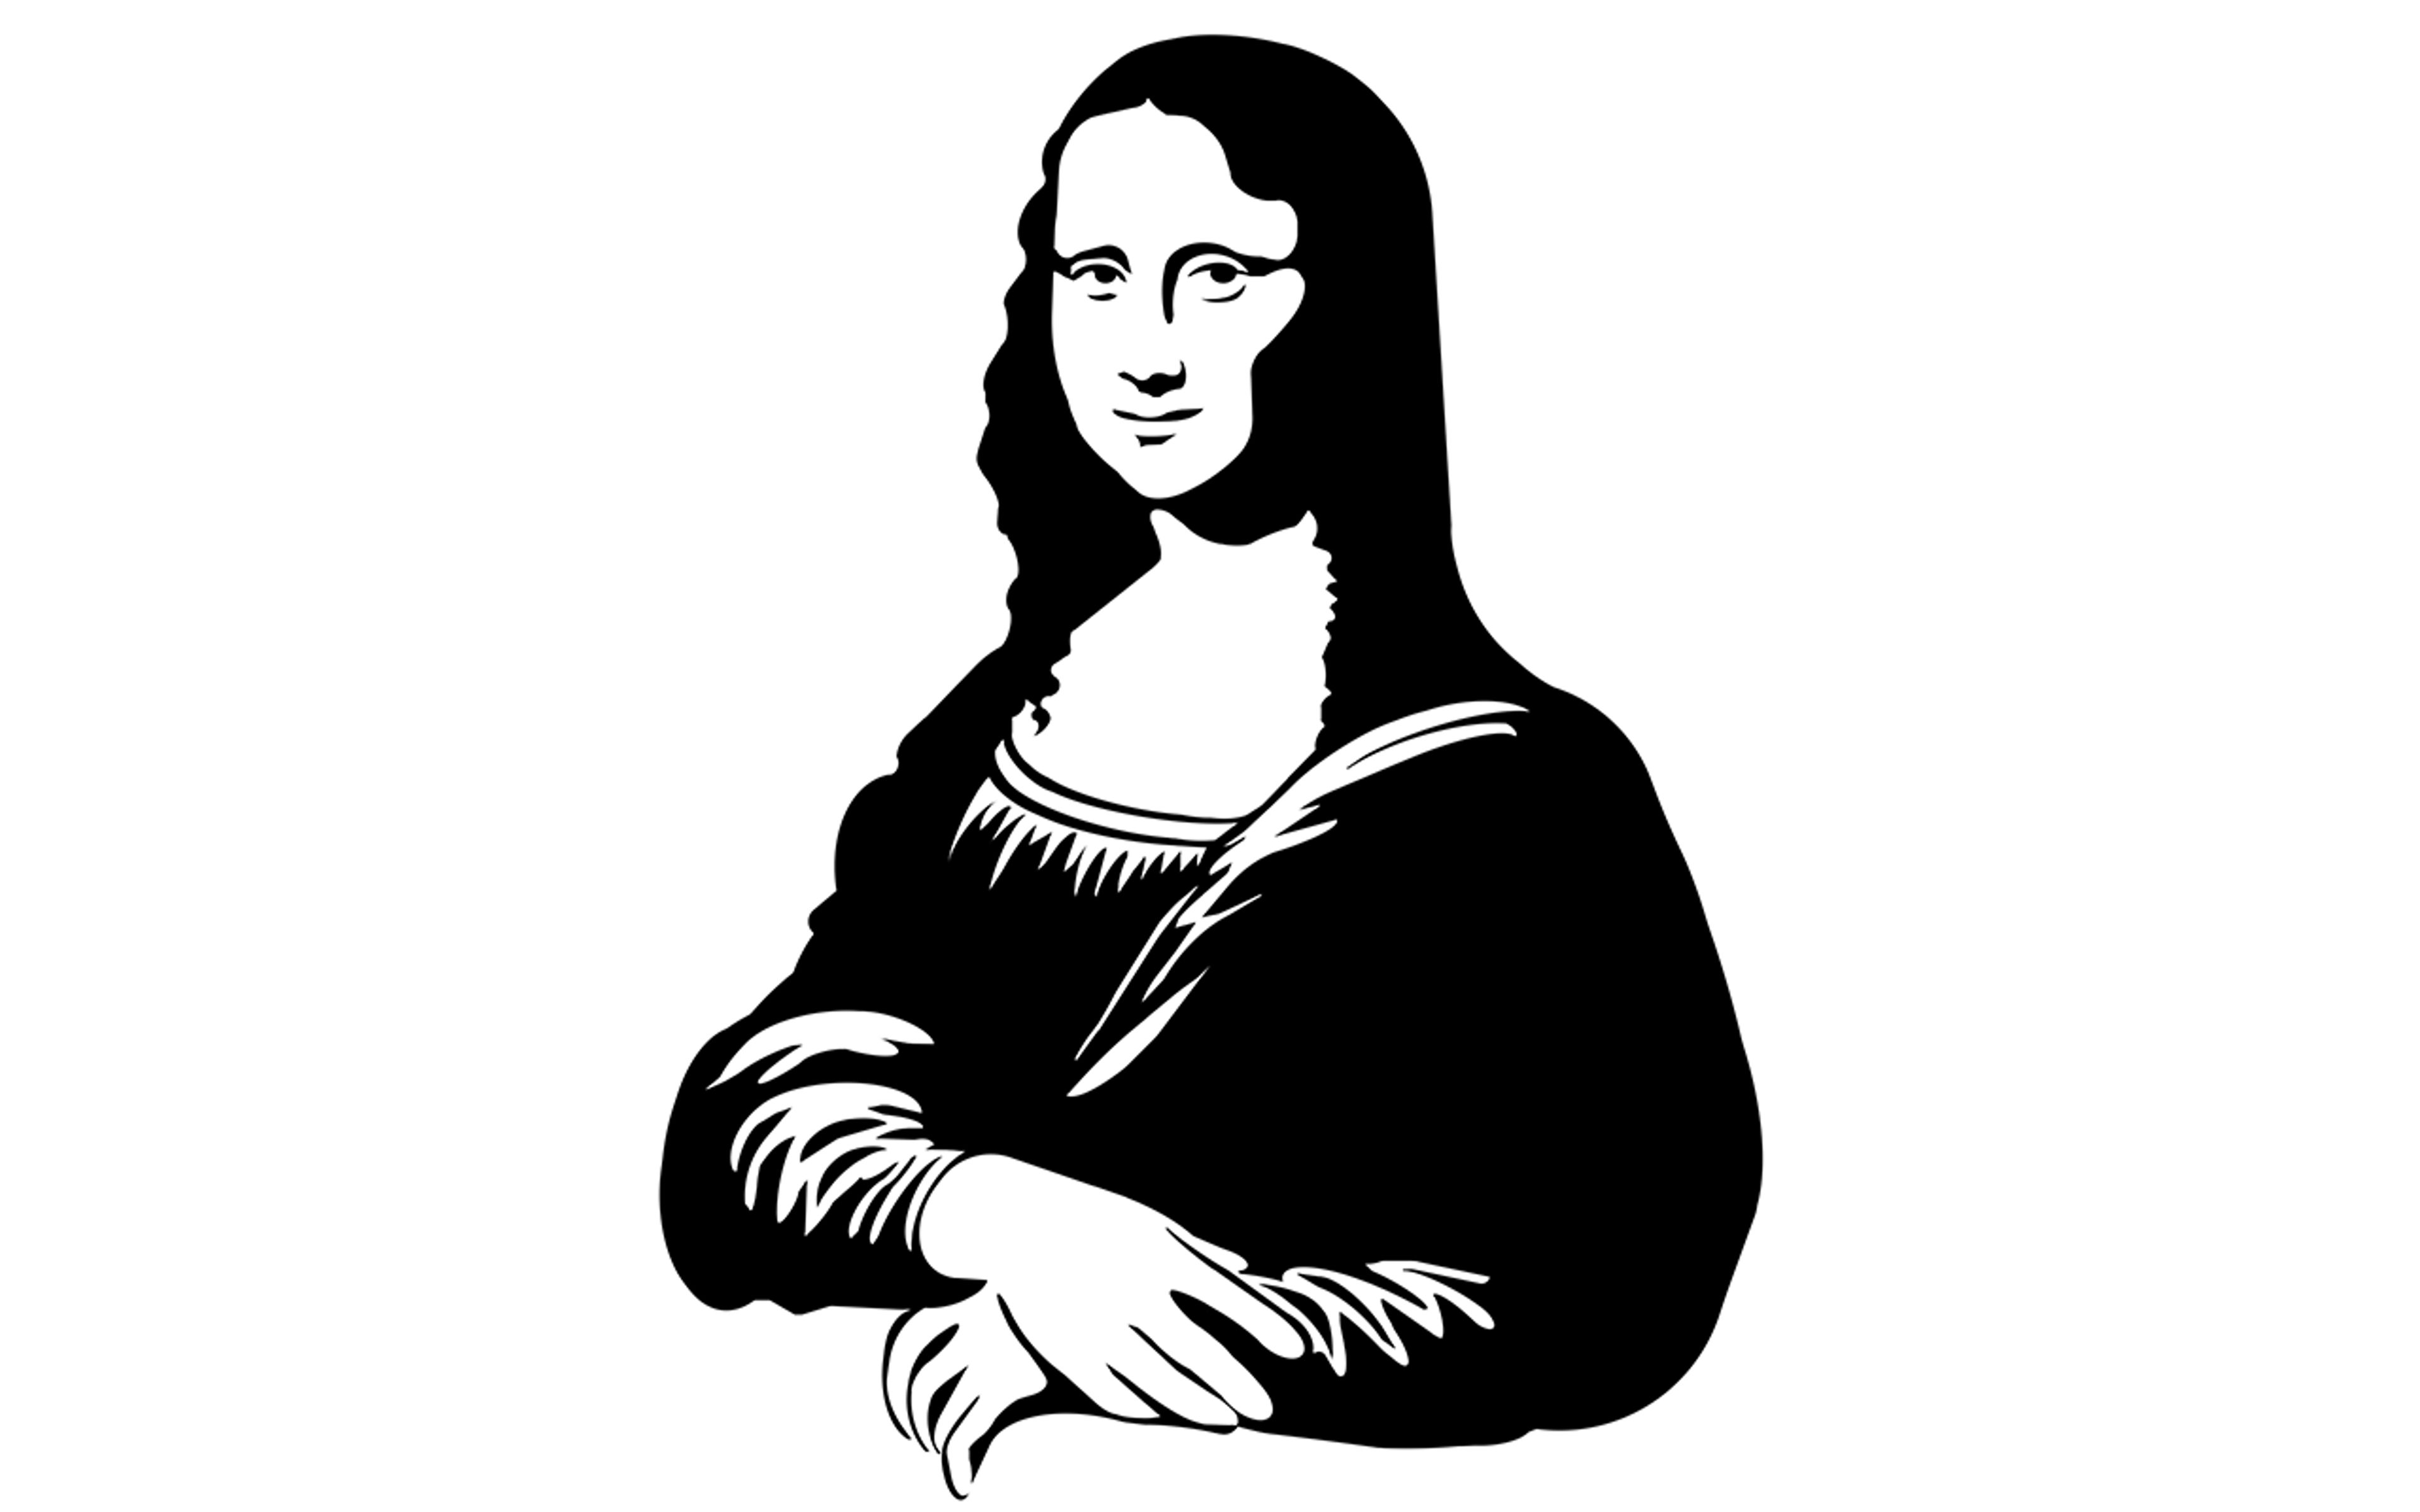 Mona Lisa image